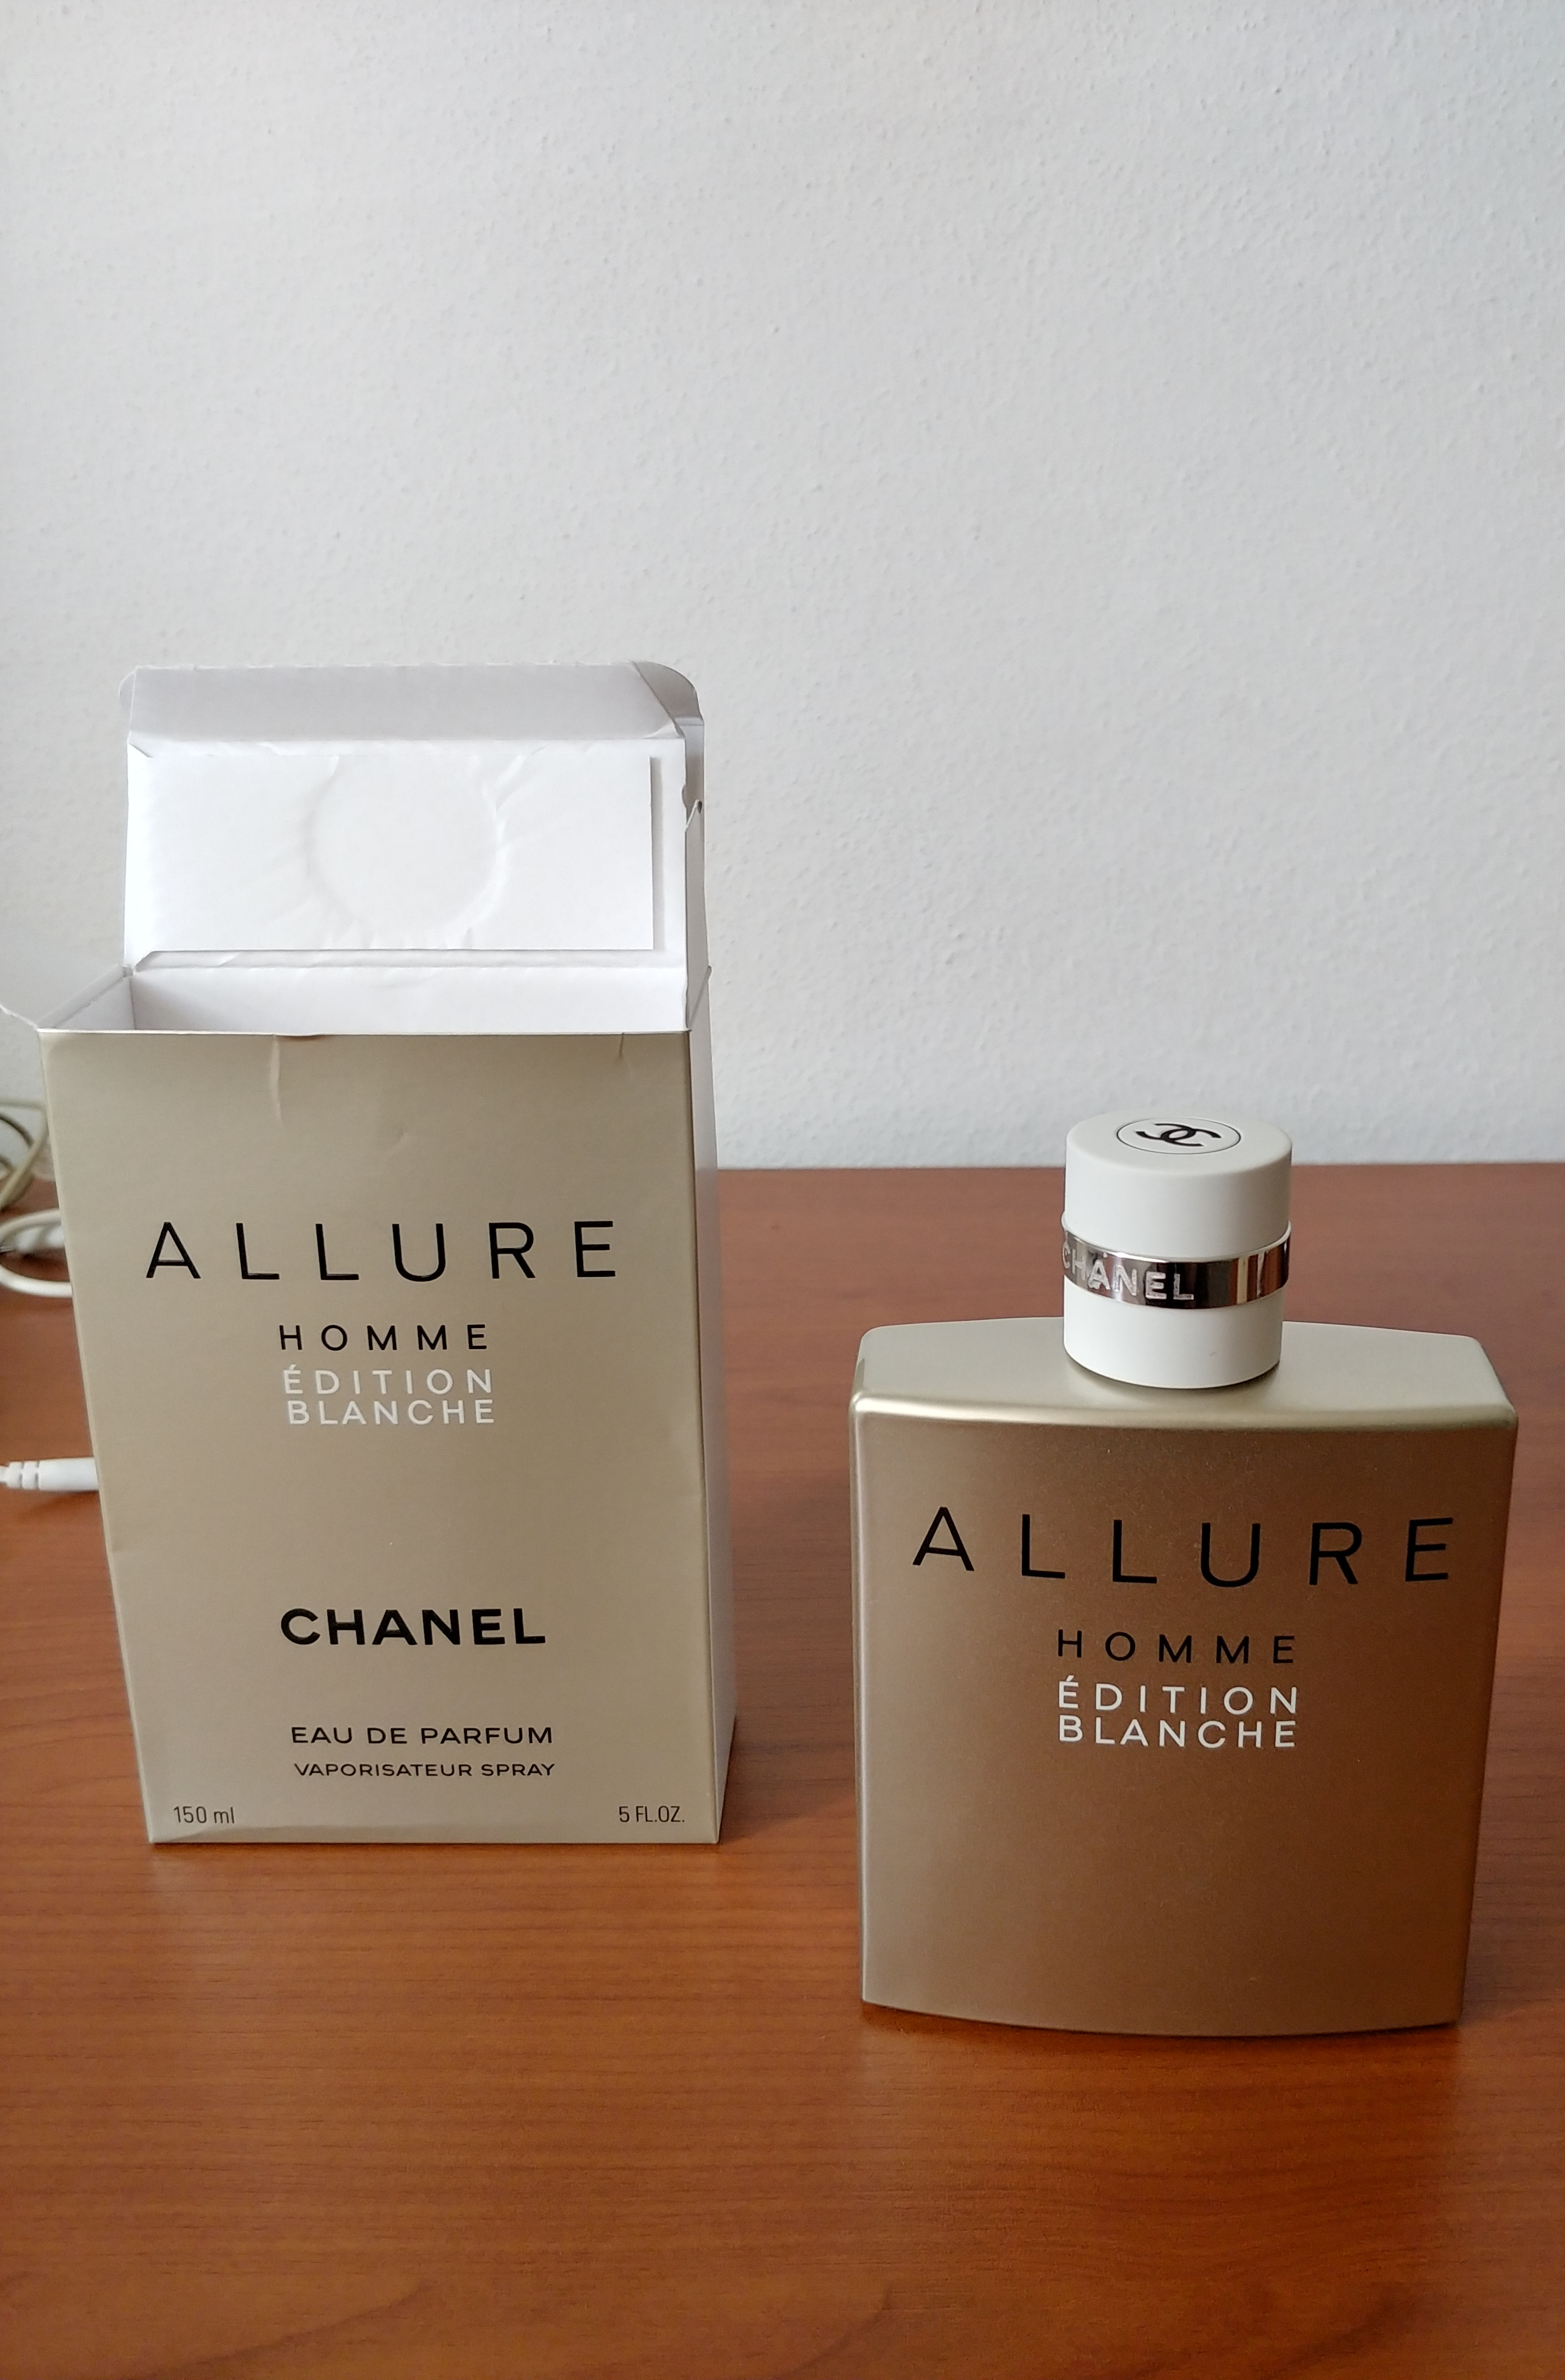 Шанель Аллюр эдишн Бланш. Chanel Allure Edition Blanche. Chanel Allure homme Edition Blanche. Chanel Allure homme Sport Edition Blanche. Chanel homme blanche